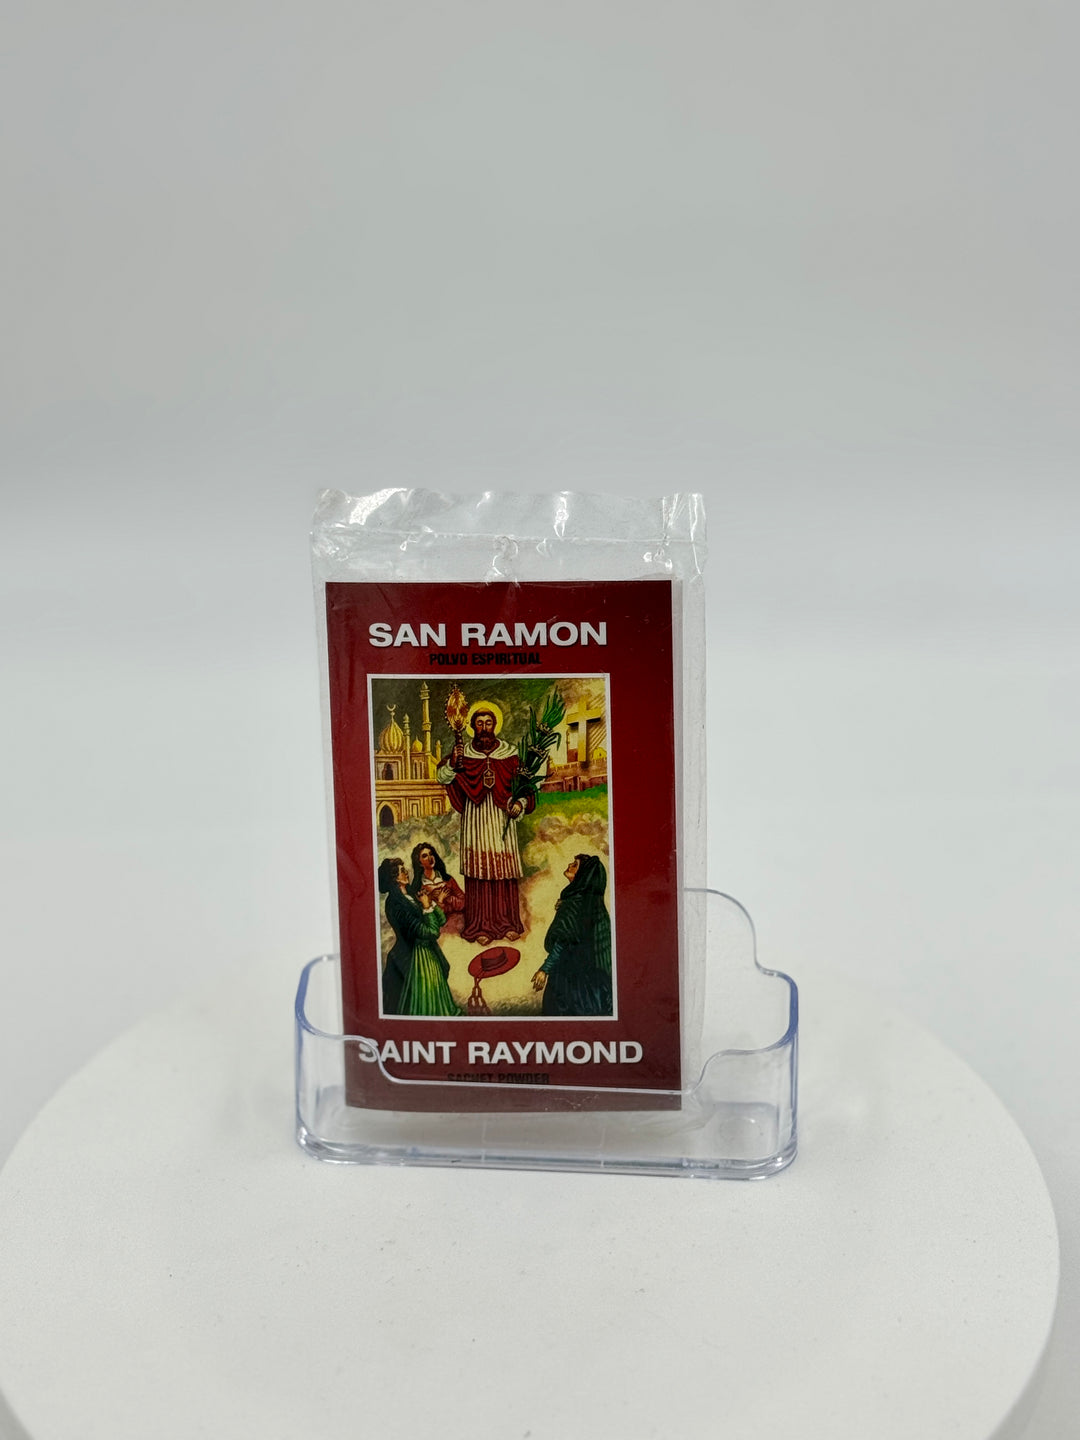 SAN RAMON (SAINT RAYMOND) -Powder/Polvo